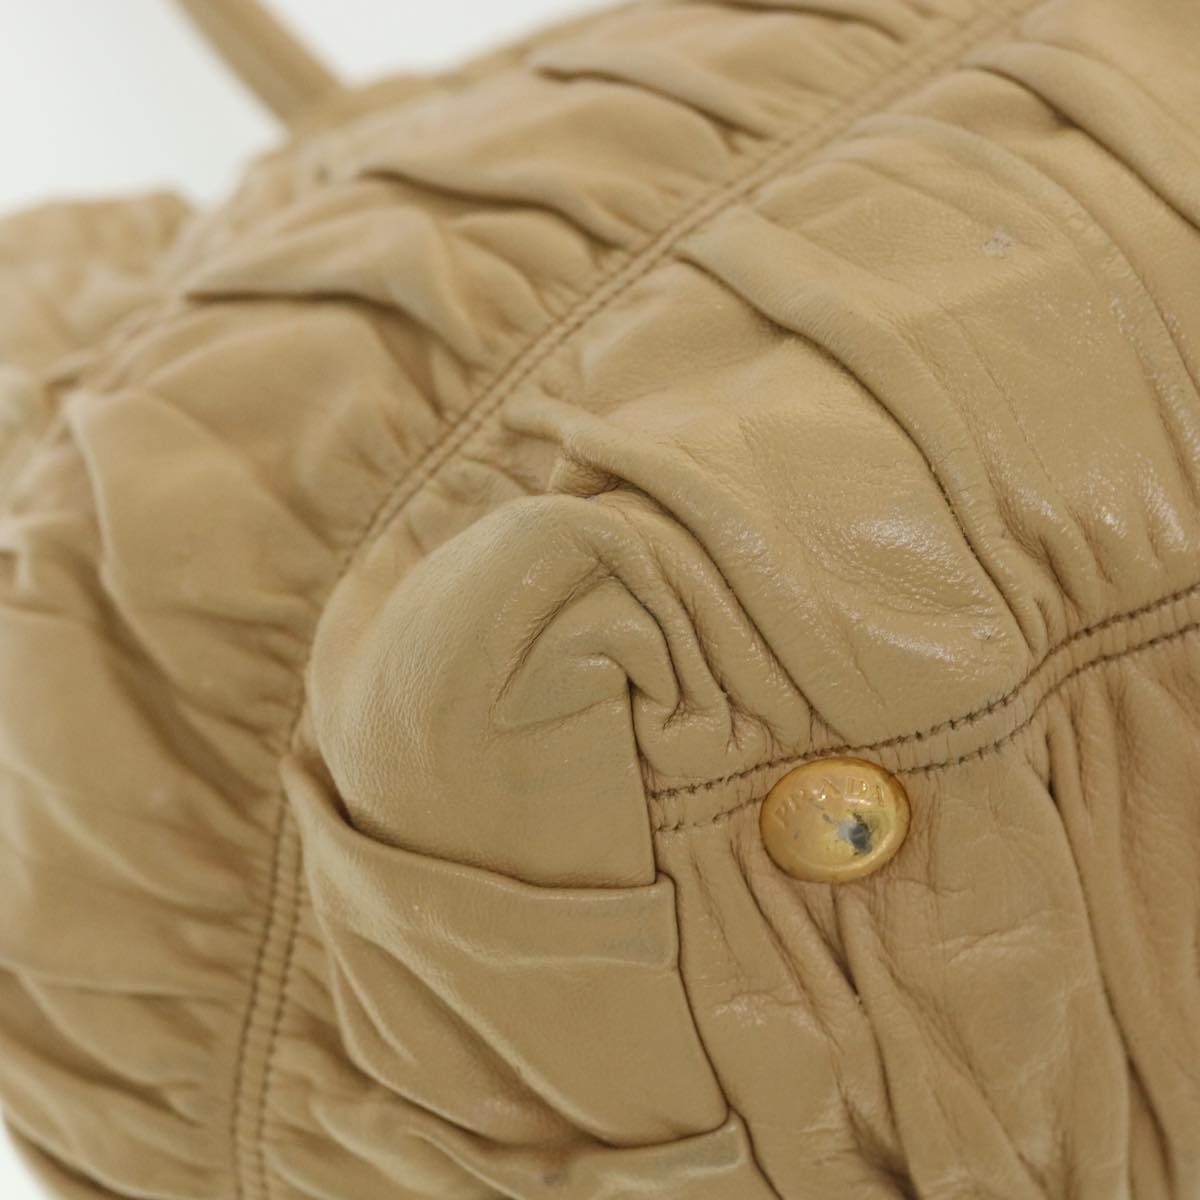 PRADA Hand Bag Leather Beige Auth bs4492